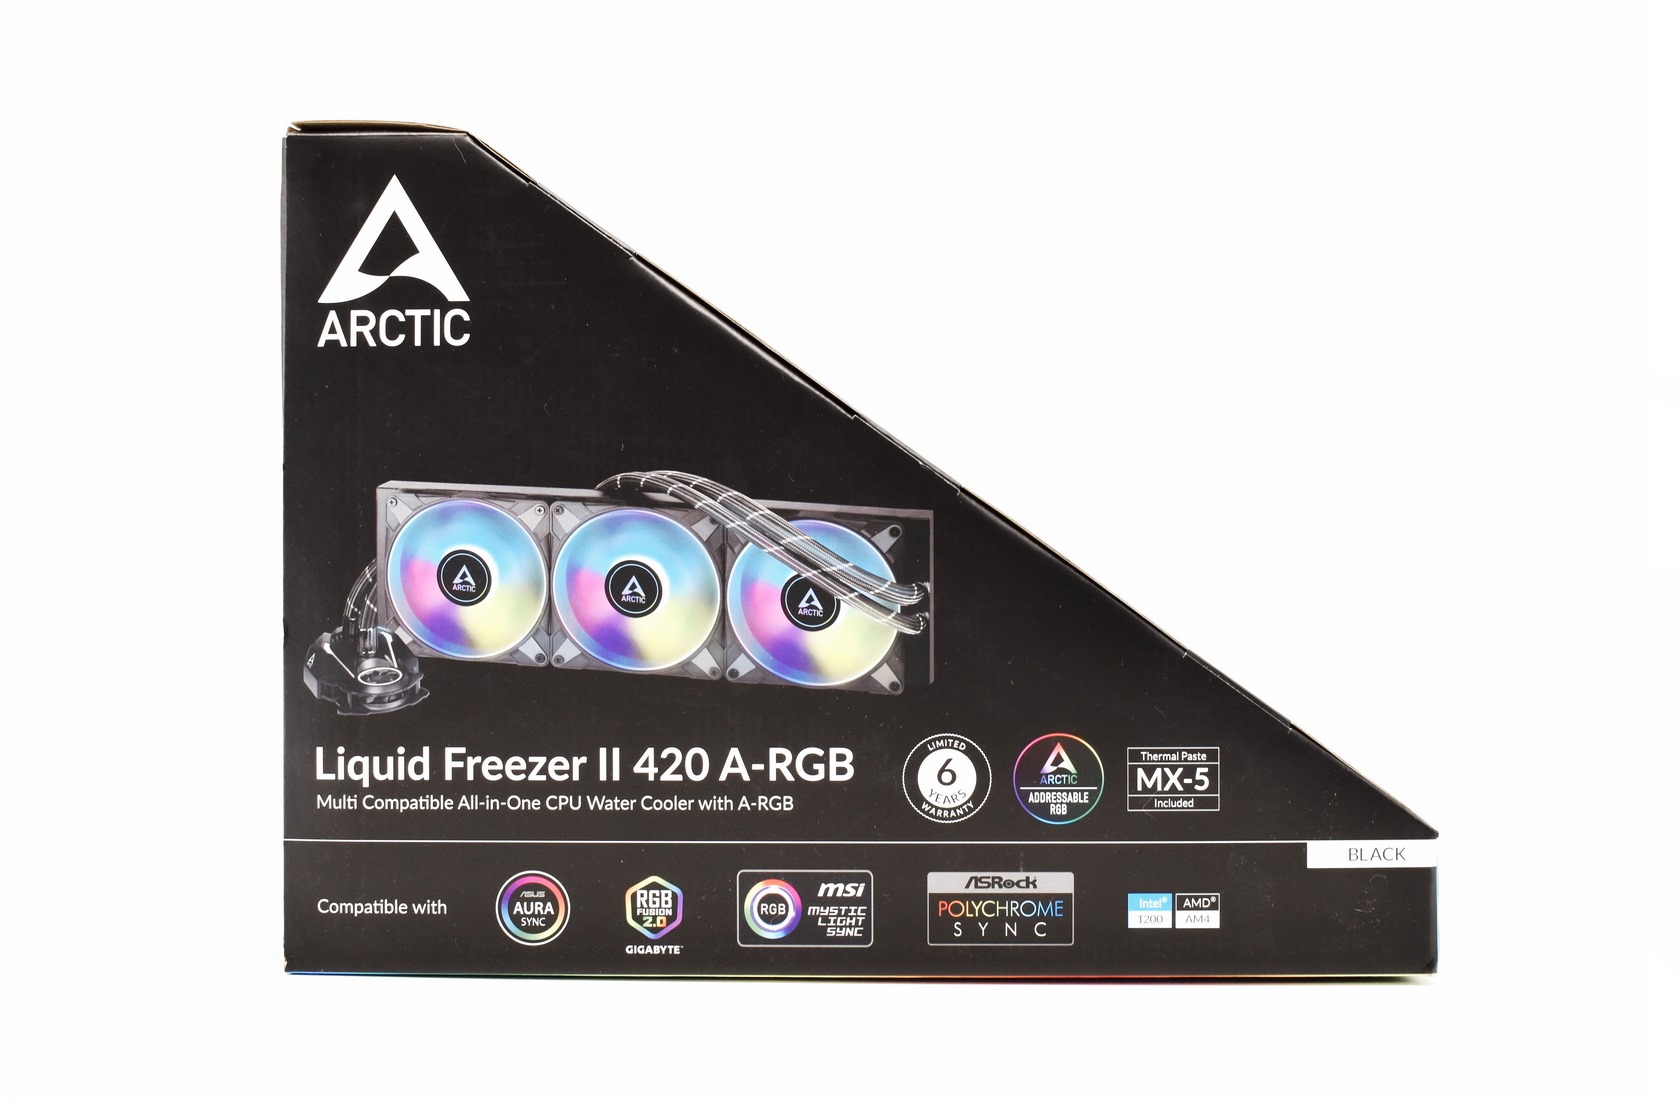 Review: Arctic Liquid Freezer II 420 - Cooling 